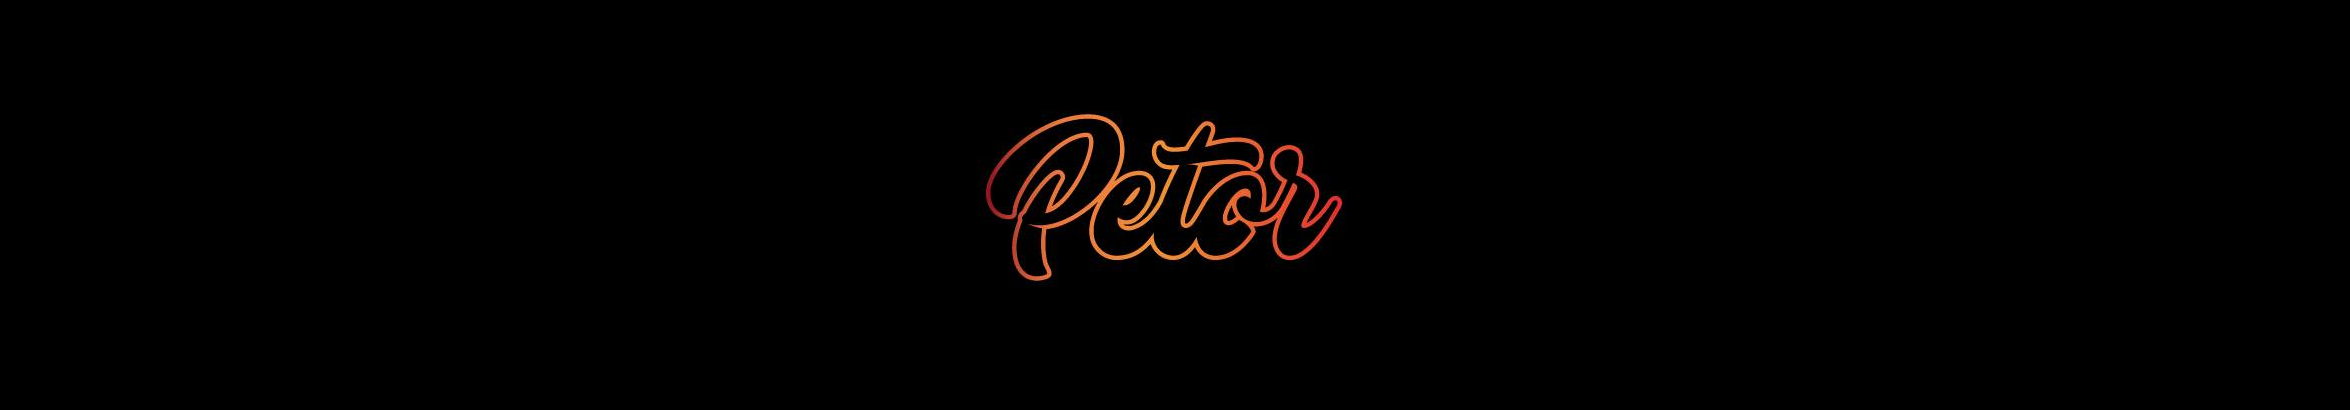 Peter Petor's profile banner